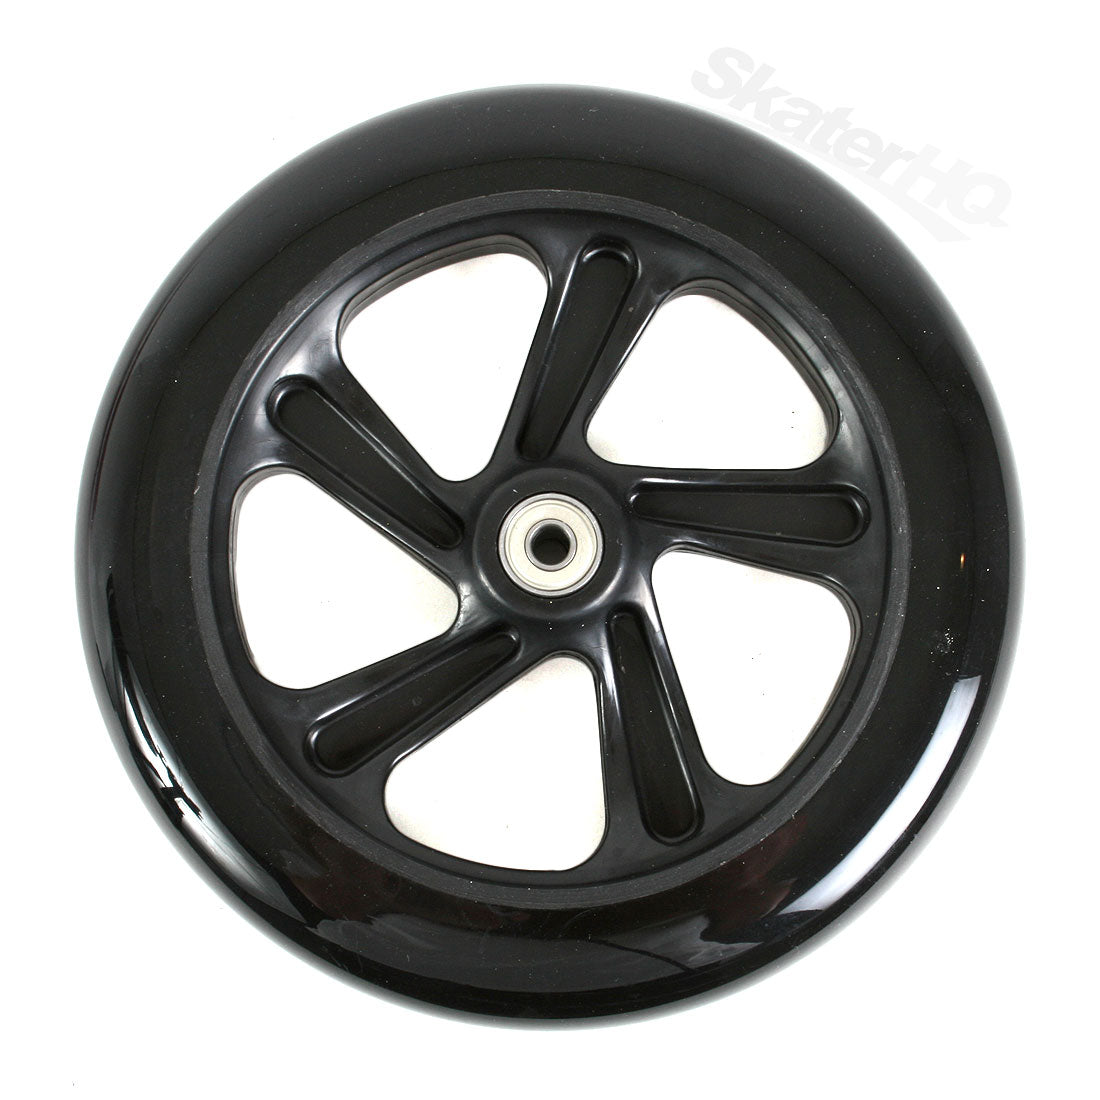 Micro 200mm Wheel - Black 6723 Scooter Wheels